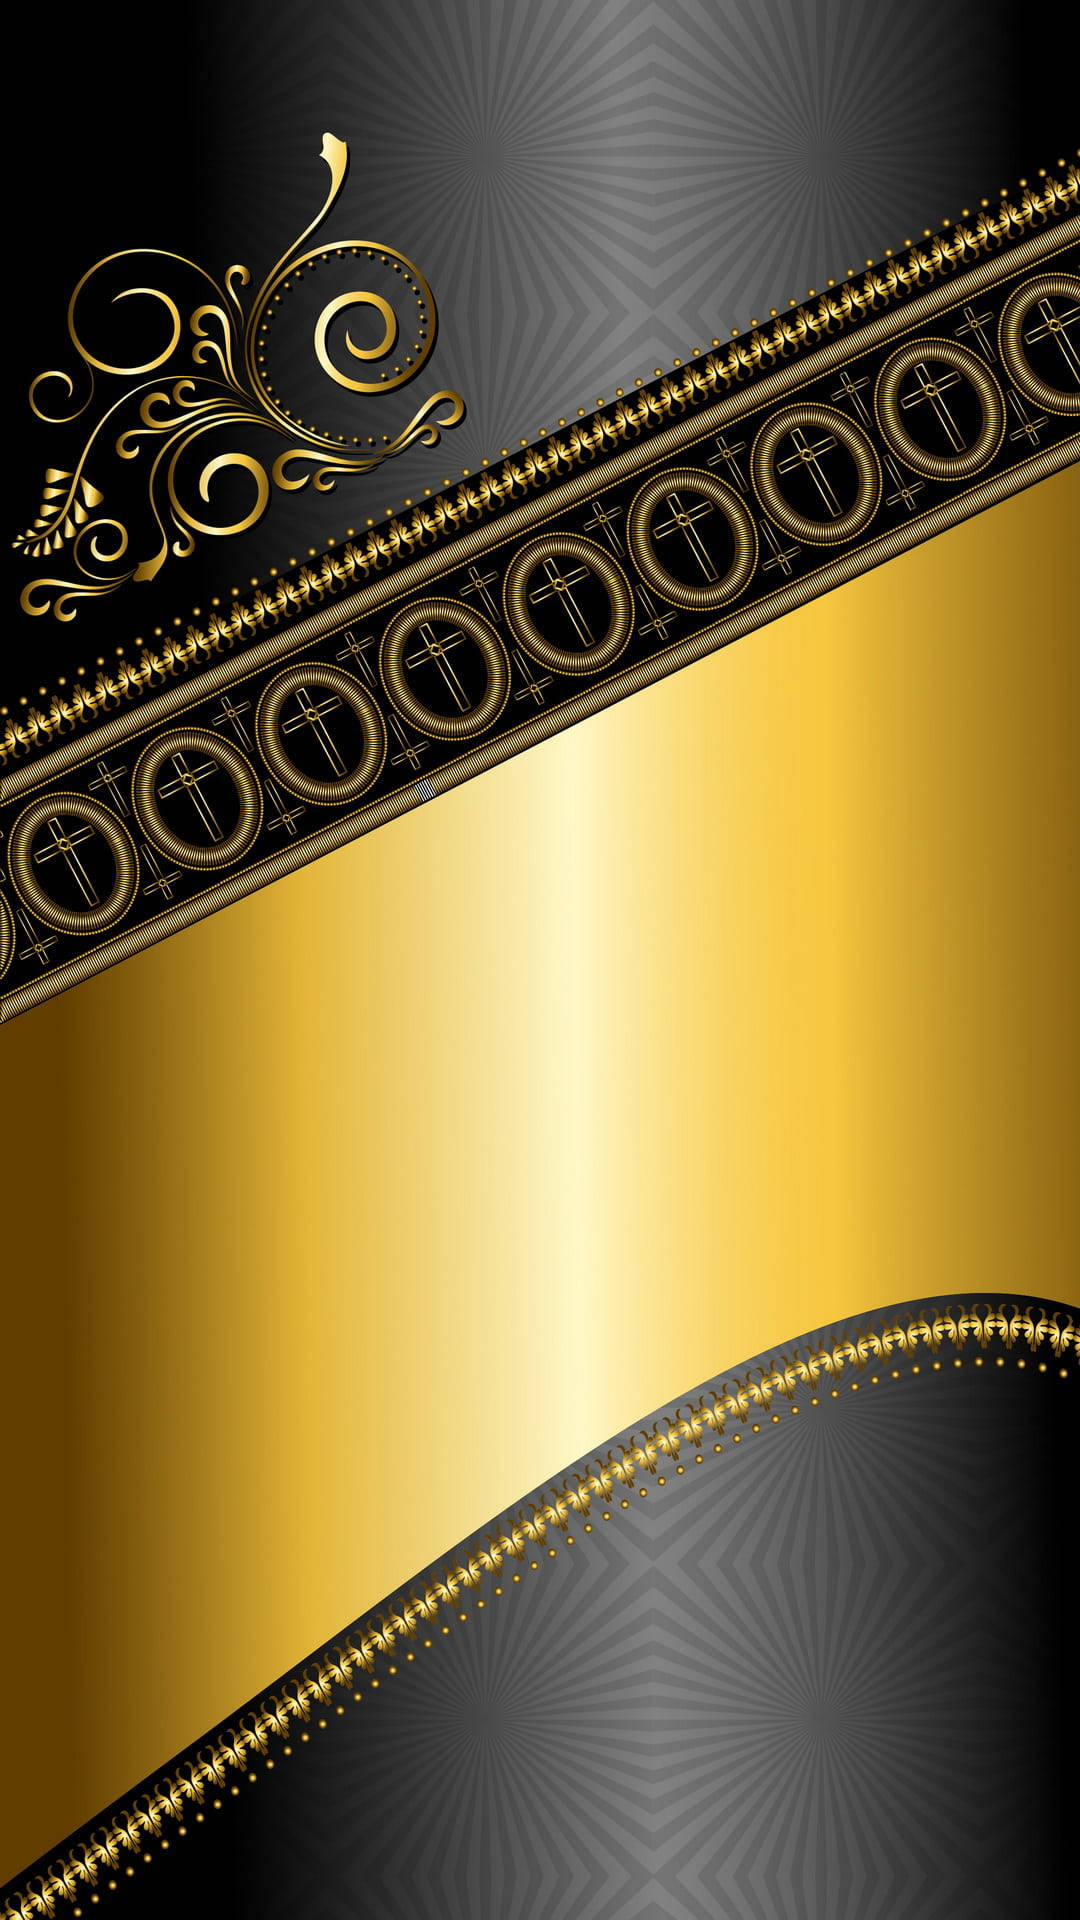 This Wallpaper Features Intricate Black And Gold Designs That Will Make Your Iphone Stand Out. = Denna Bakgrundsbild Har Intrikata Svarta Och Guld-designer Som Kommer Att Få Din Iphone Att Sticka Ut. Wallpaper